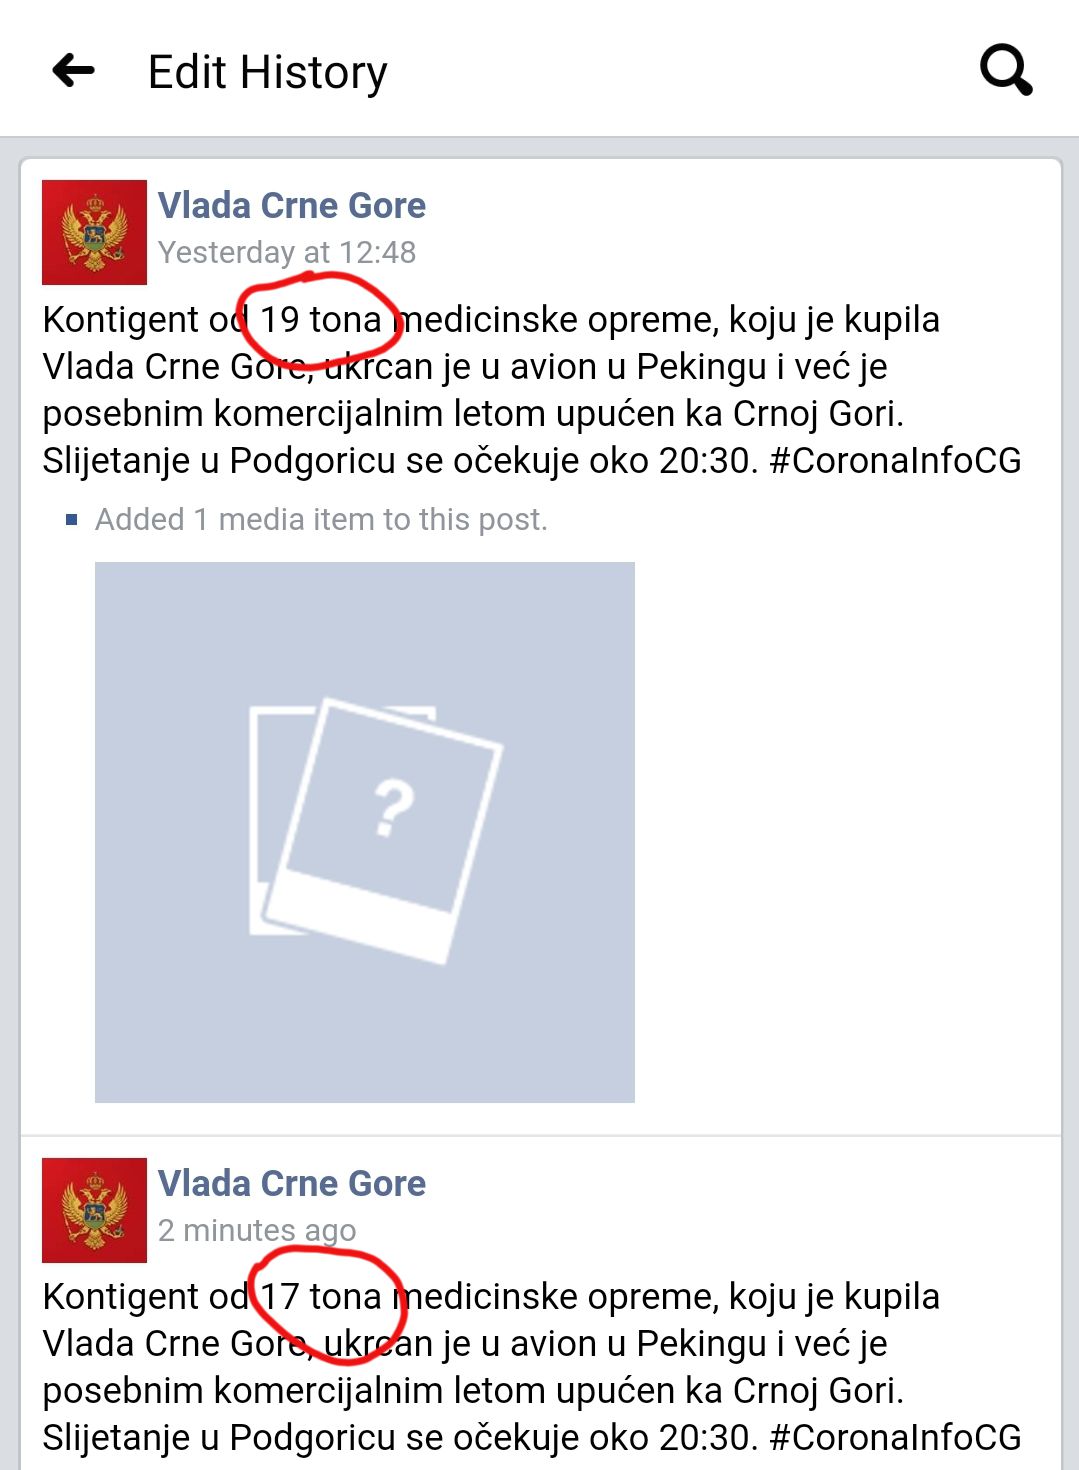 Post objavljen na Fejsbuk stranici Vlade Crne Gore